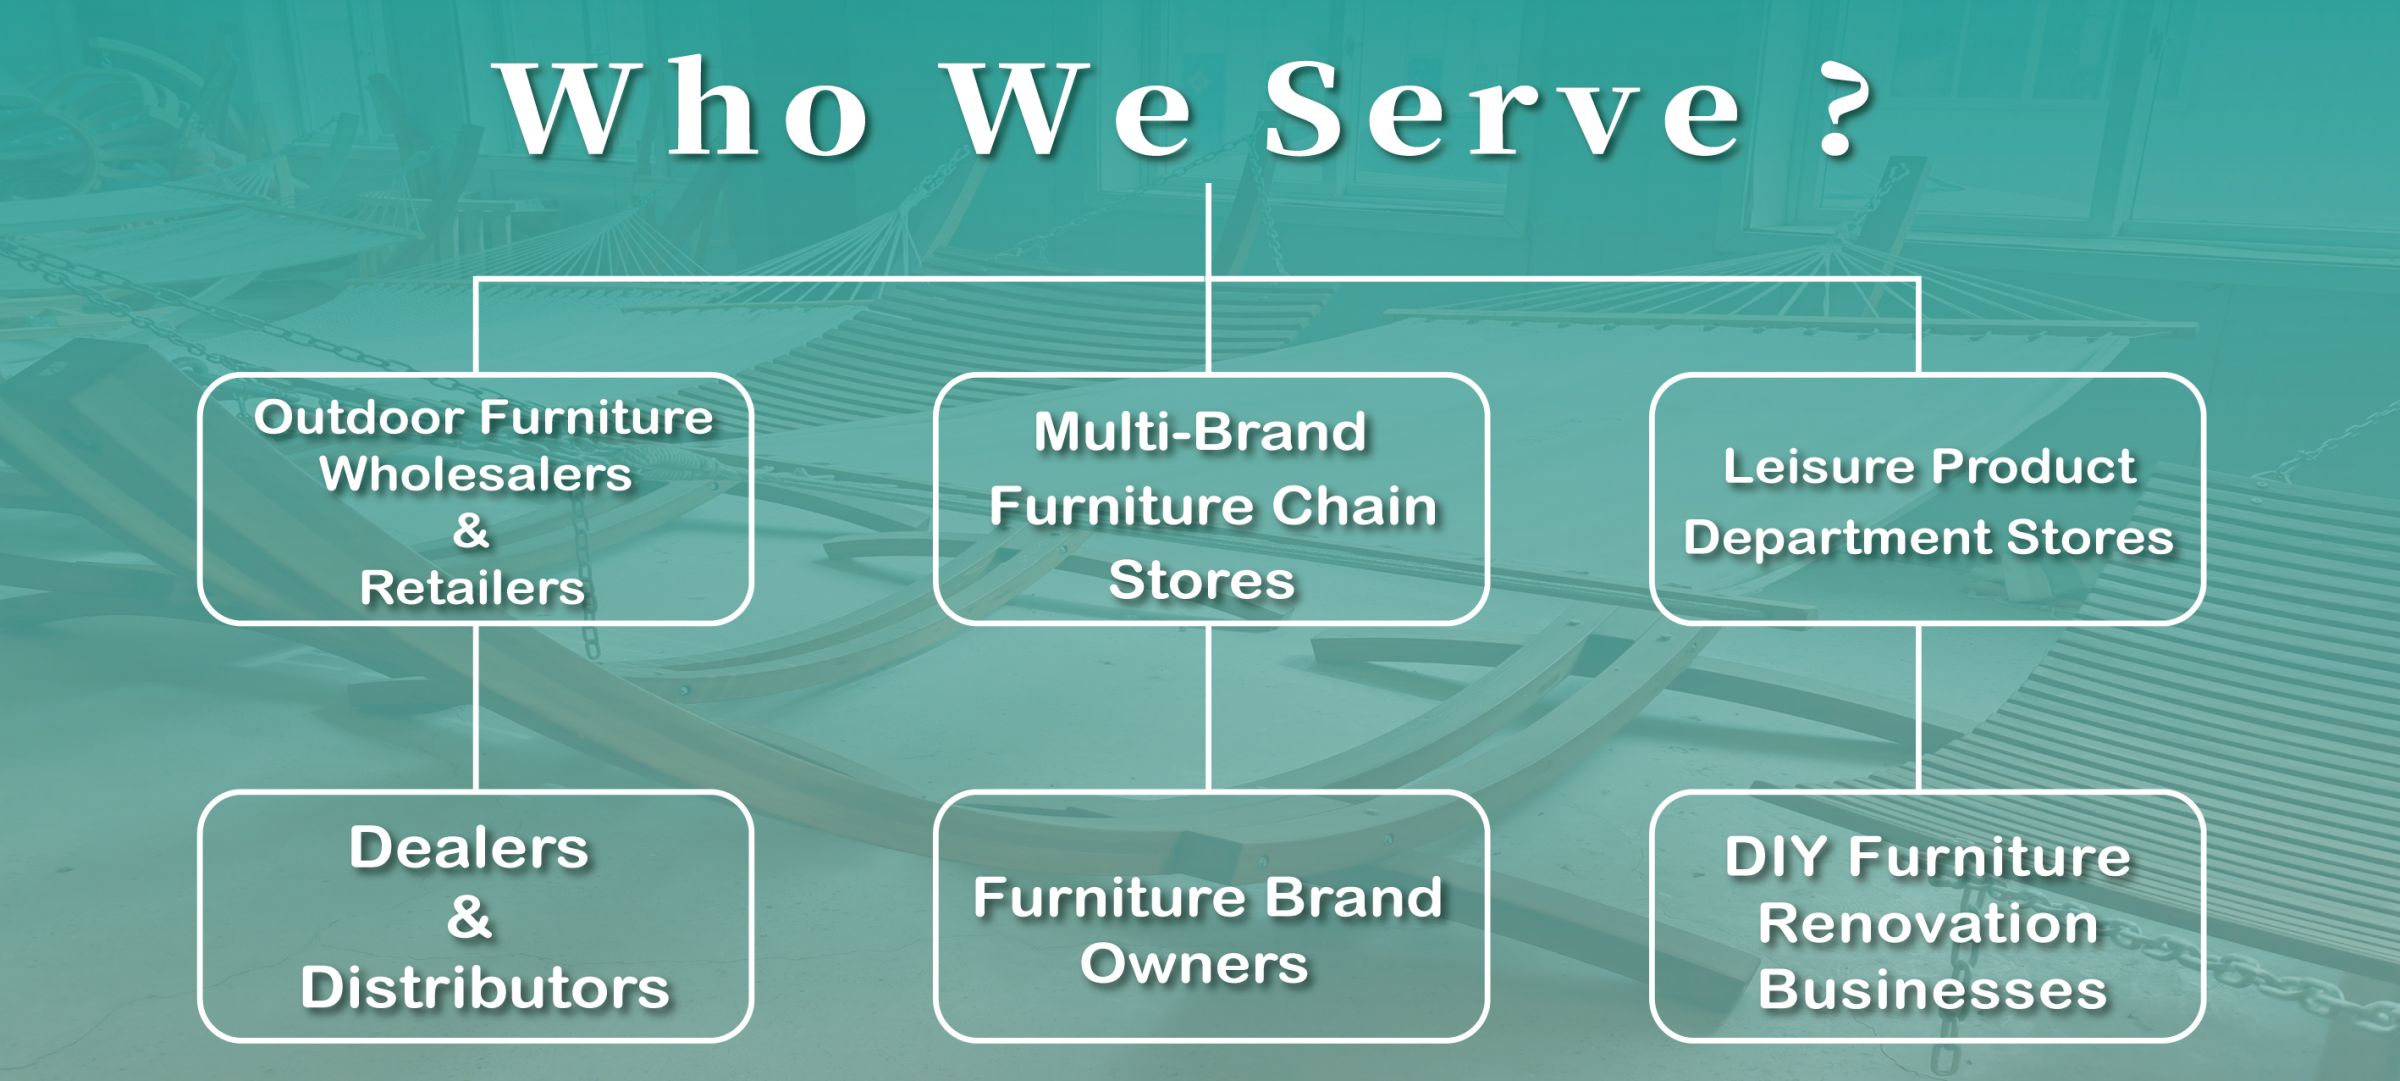 WOODEVER Outdoor Furniture serves global b2b manufacturers, furniture brands, etc.